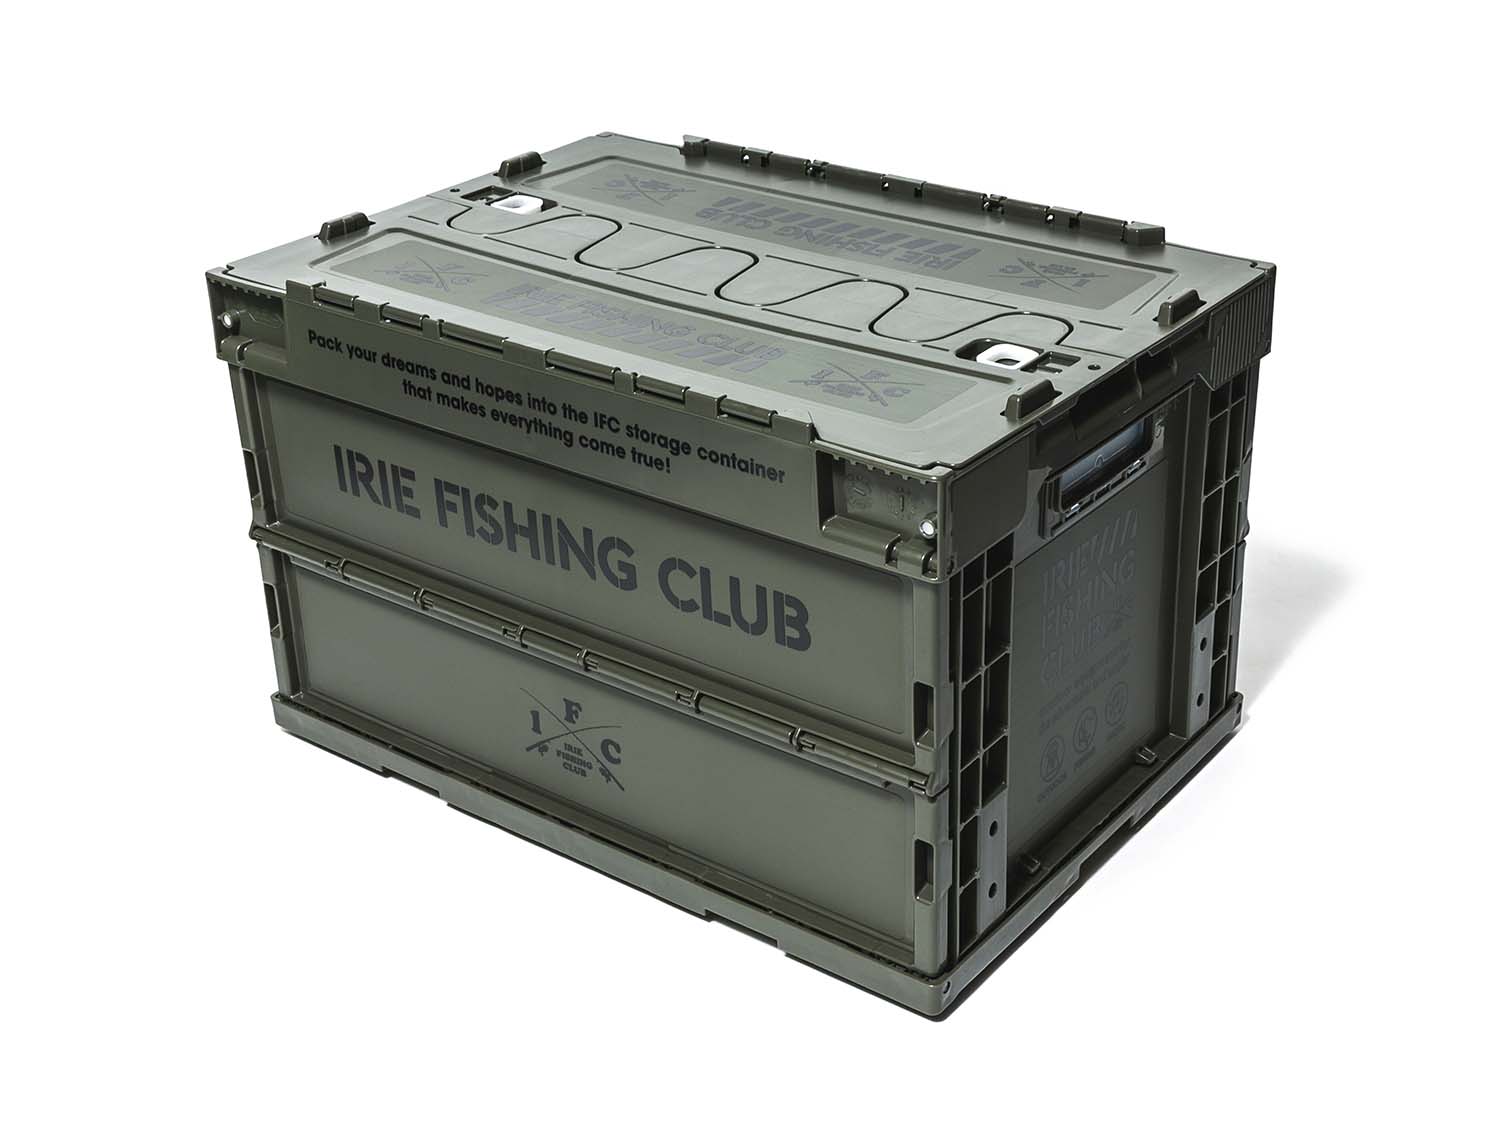 I.F.C STORAGE CONTAINER - IRIE FISHING CLUB